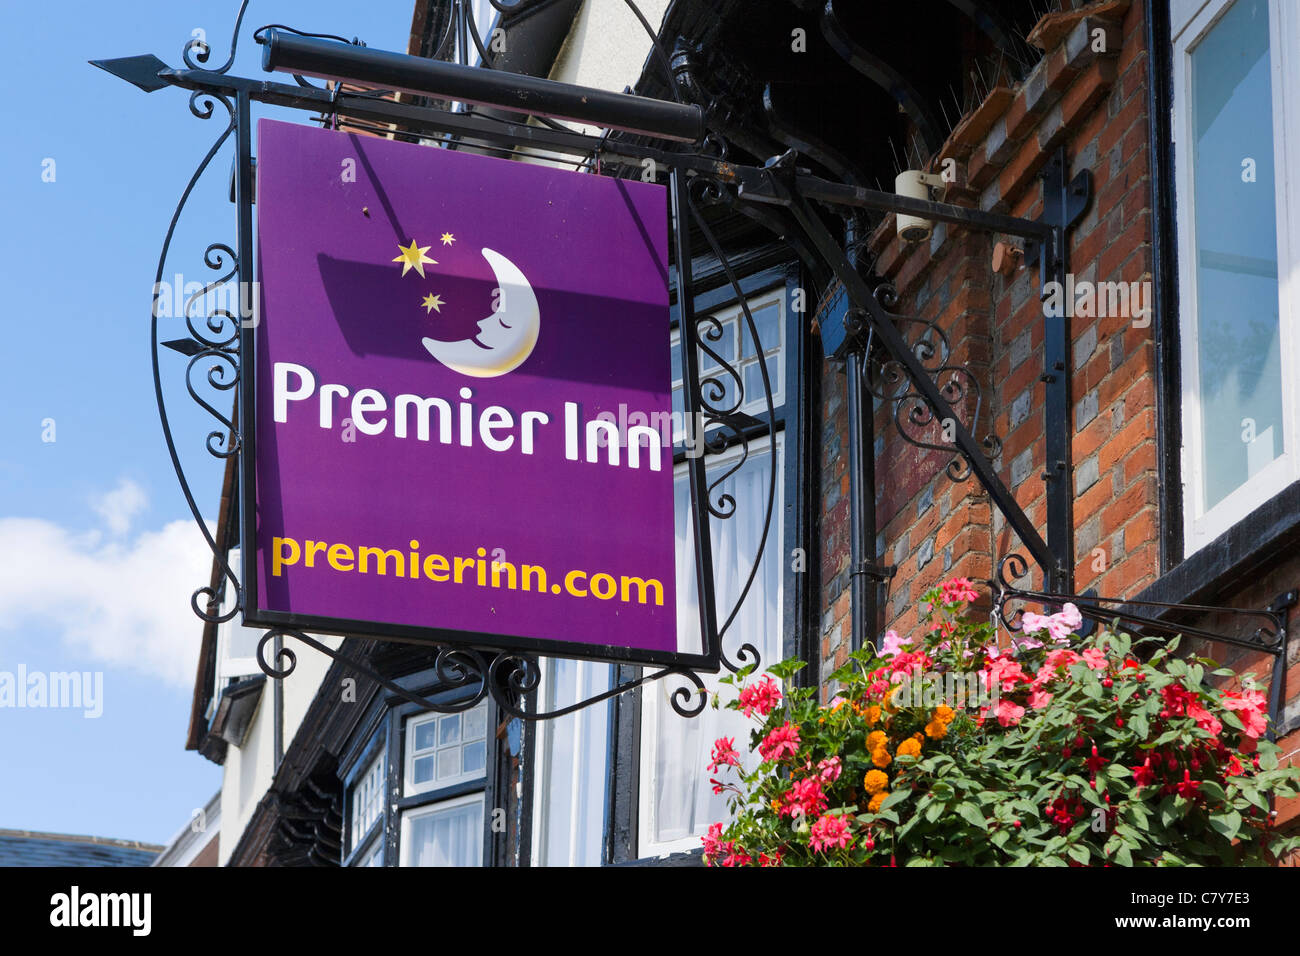 Premier Inn Hotel on the High Street in Marlow, Buckinghamshire, England, UK Stock Photo